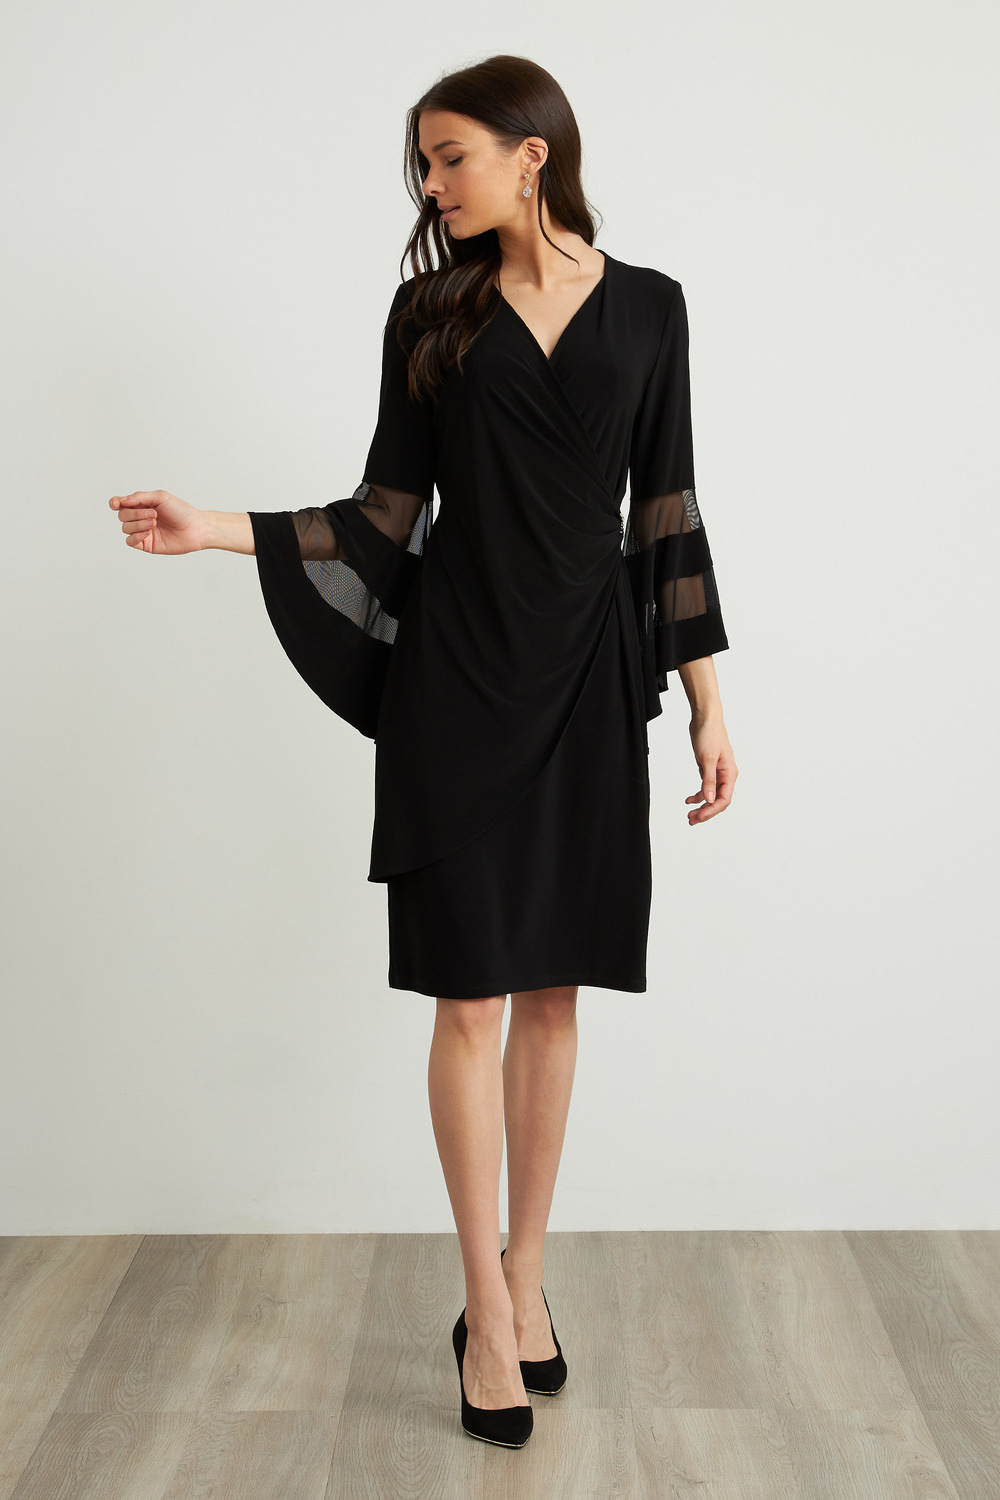 Joseph Ribkoff Bell Sleeve Dress Style 211118. Black